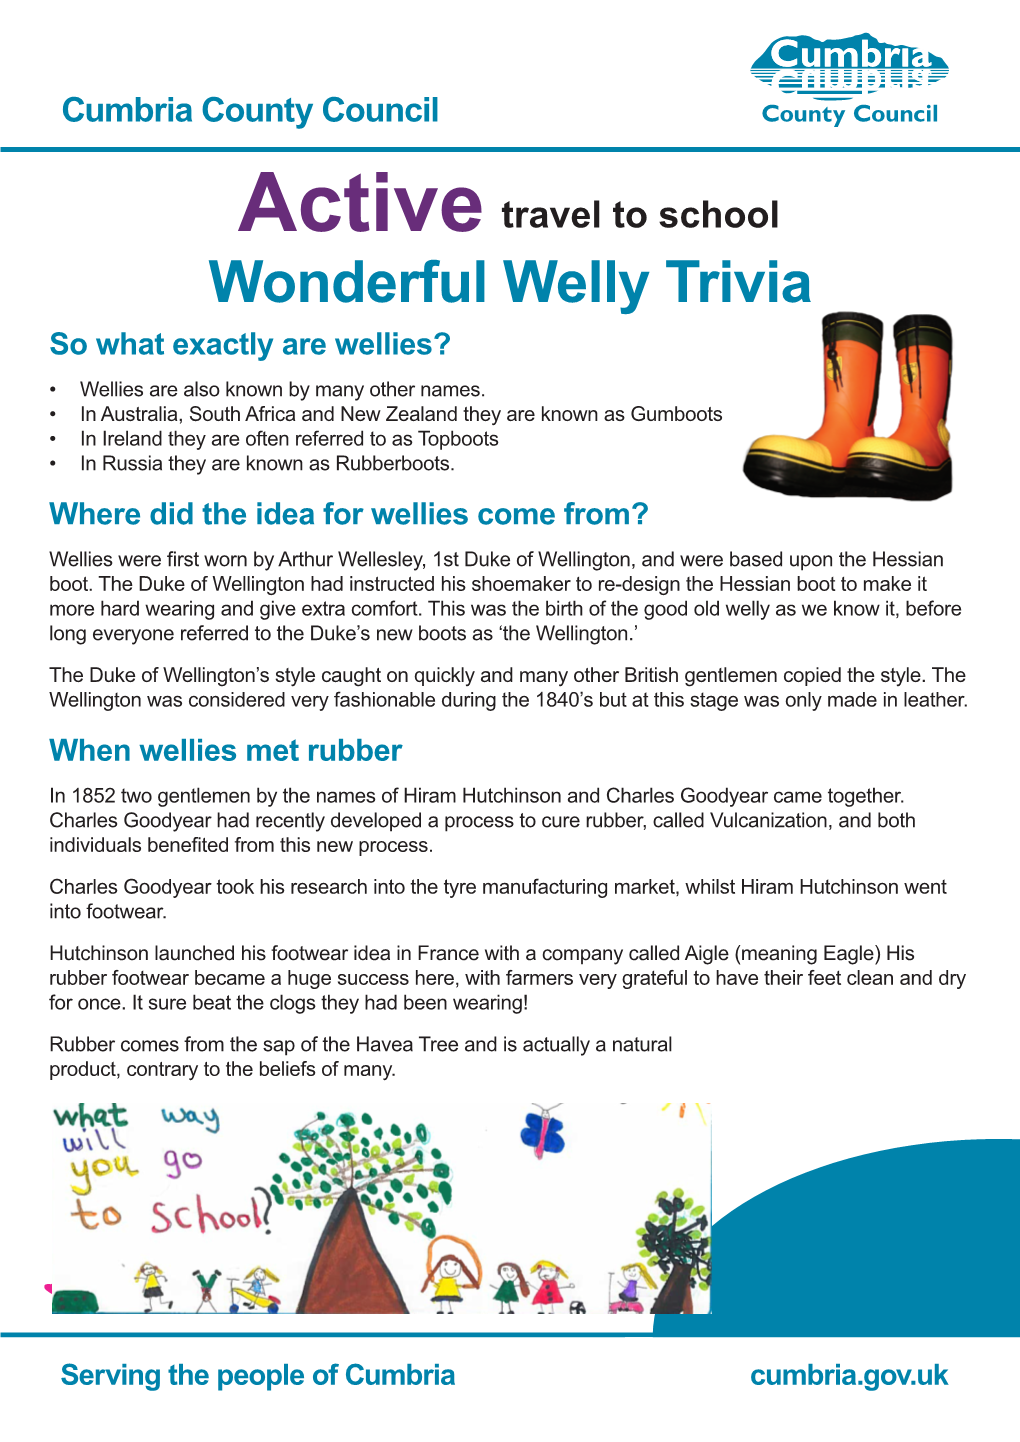 Welly Walking Trivia